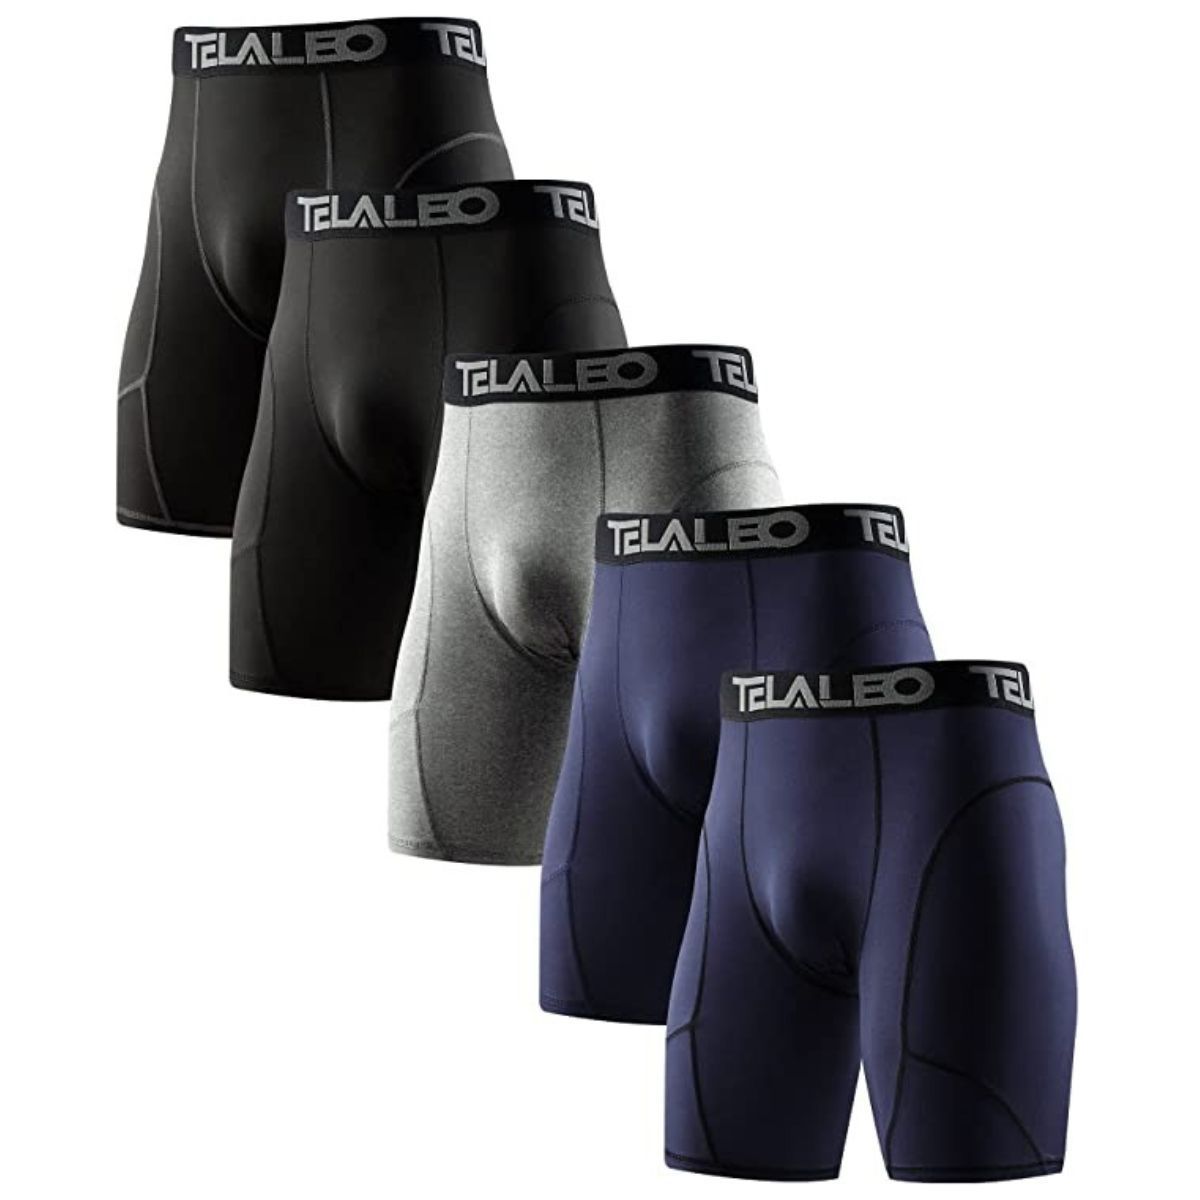 Holure Men's 3 Pack Performance Compression Shorts 